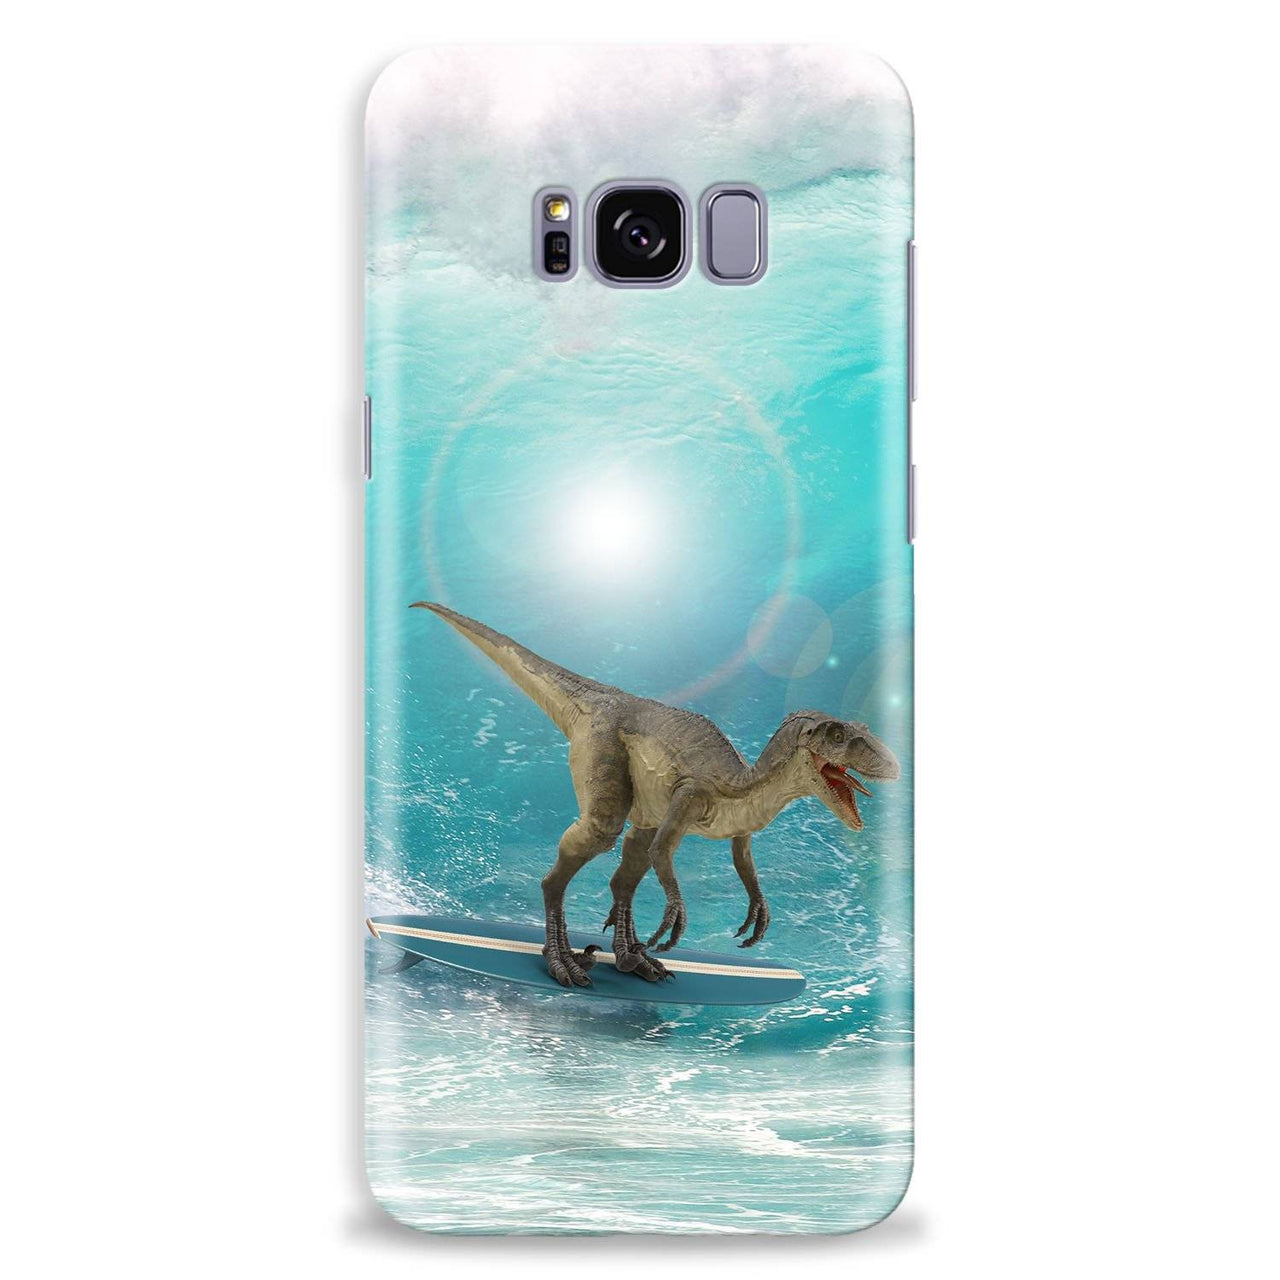 dinosaur surfing phone case phone cover iphone samsung